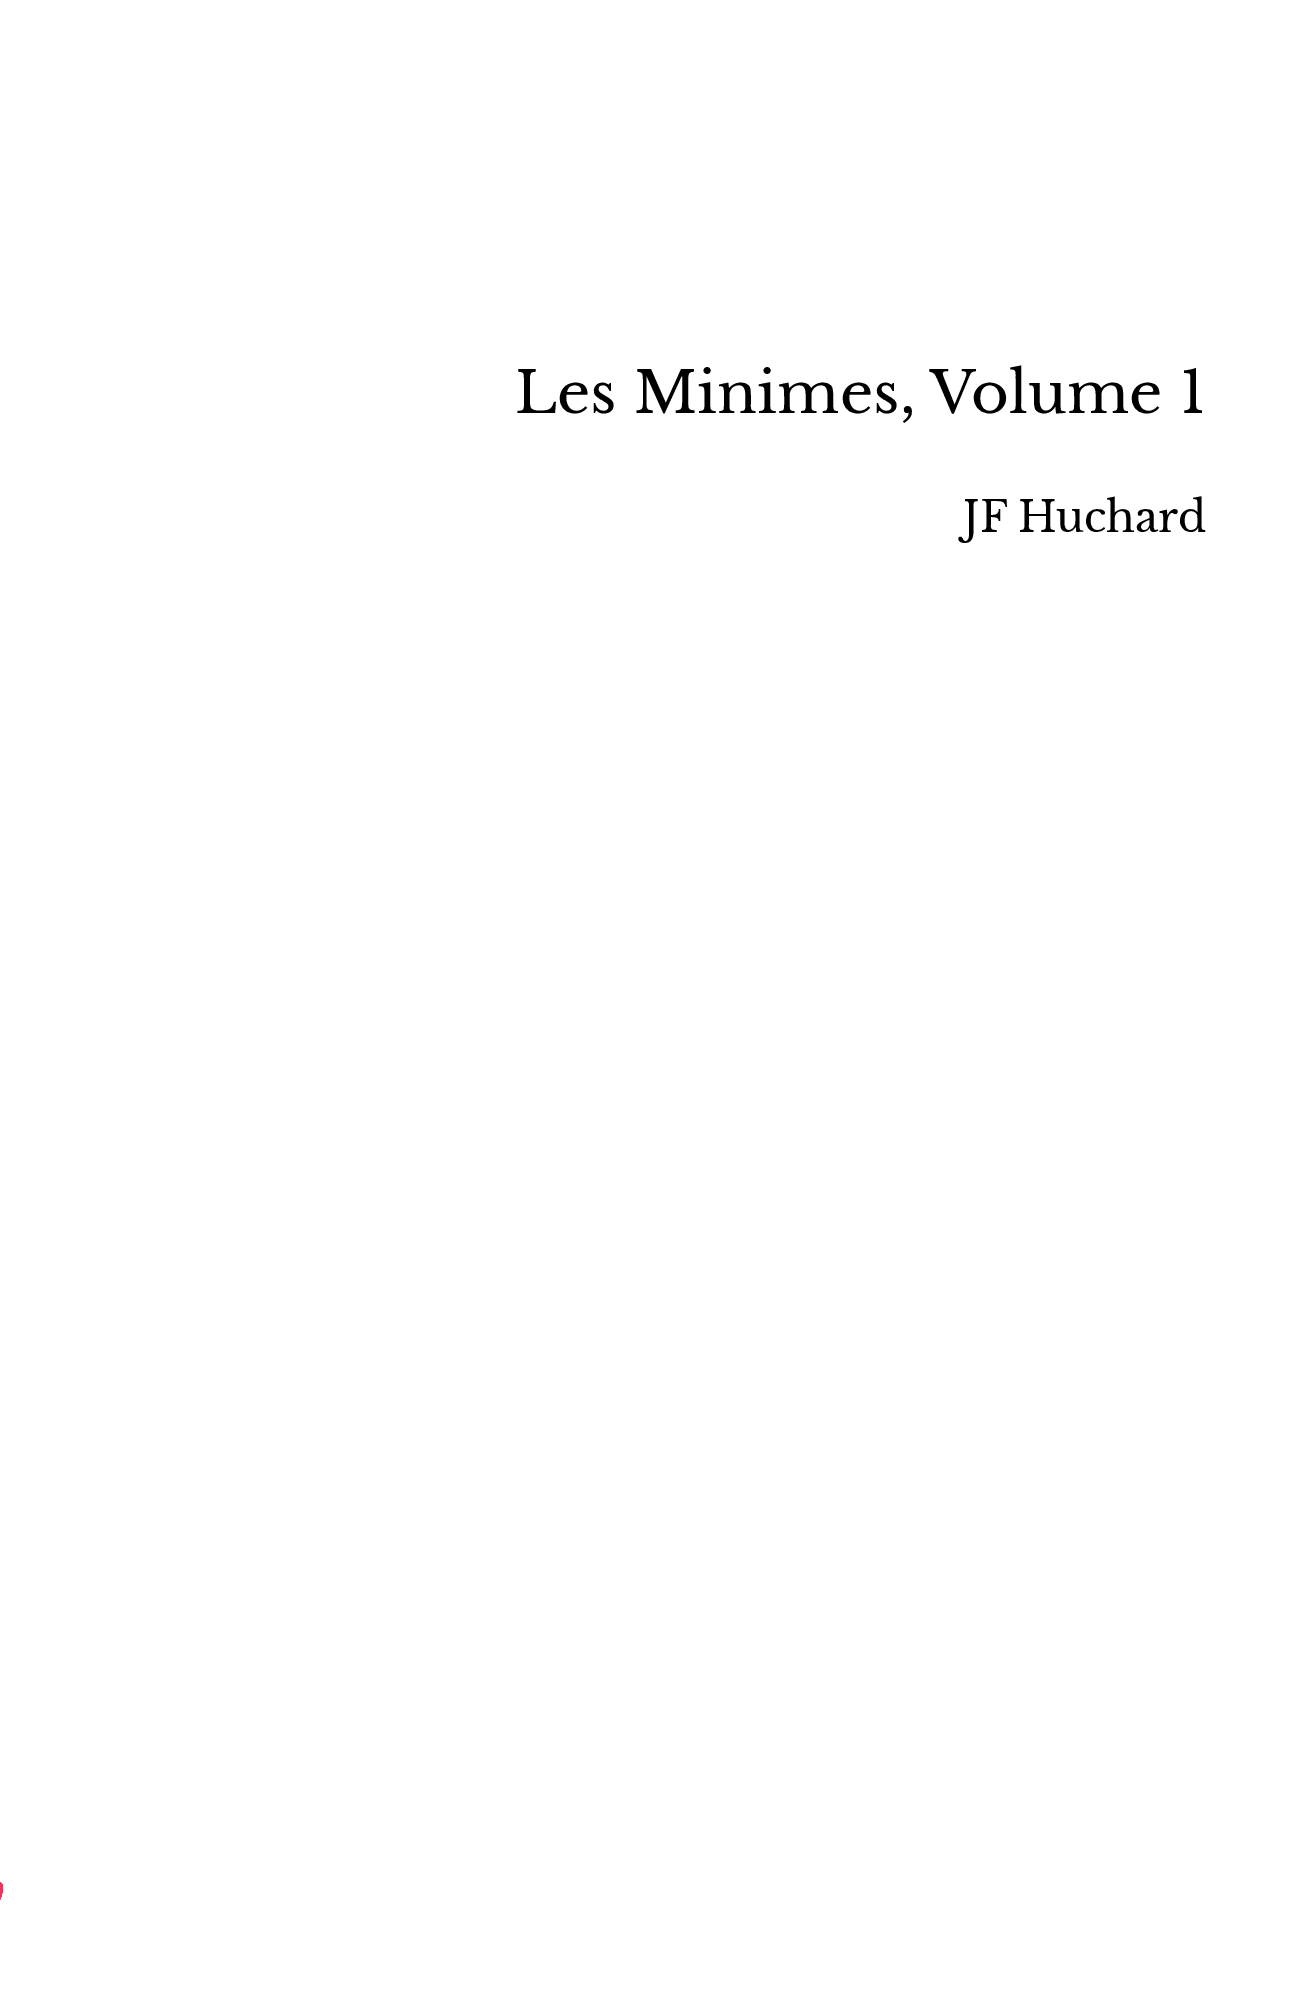 Les Minimes, Volume 1